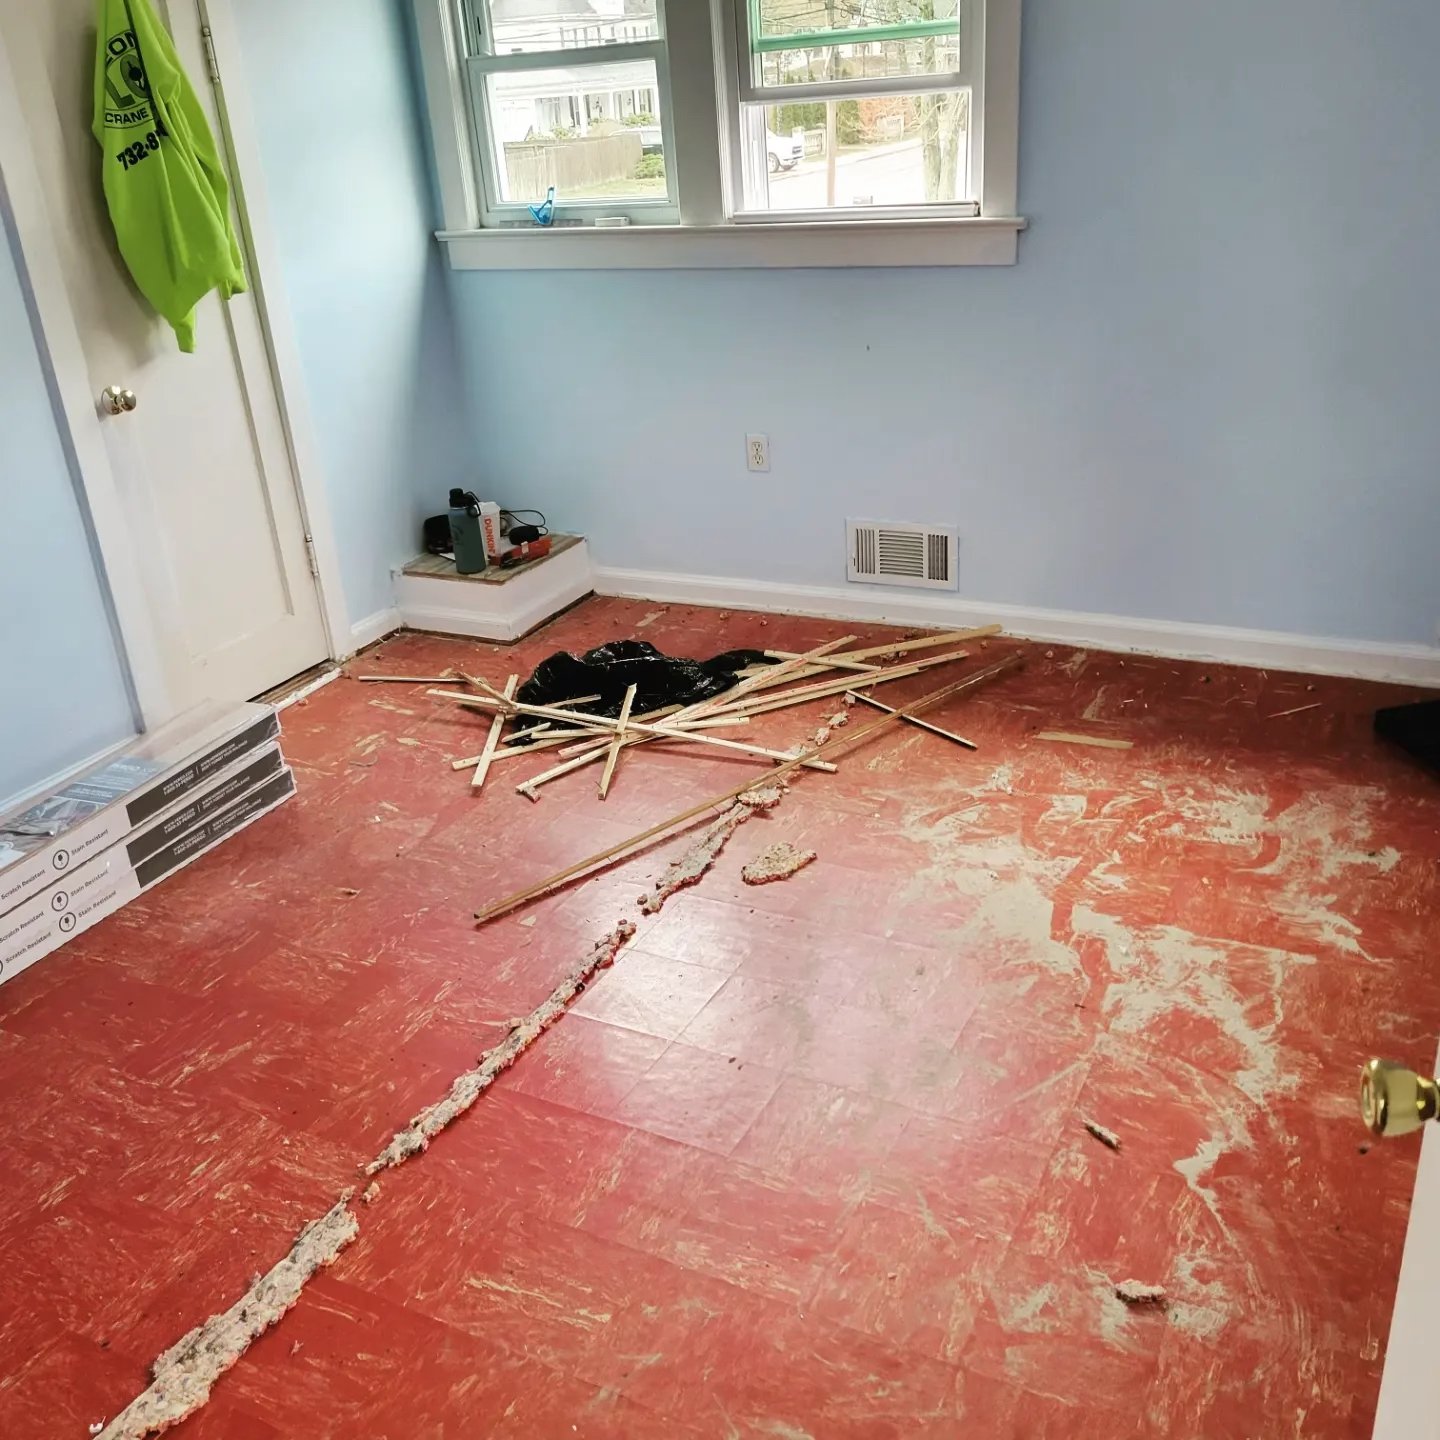 Bedroom that needs new flooring | Home improvement services